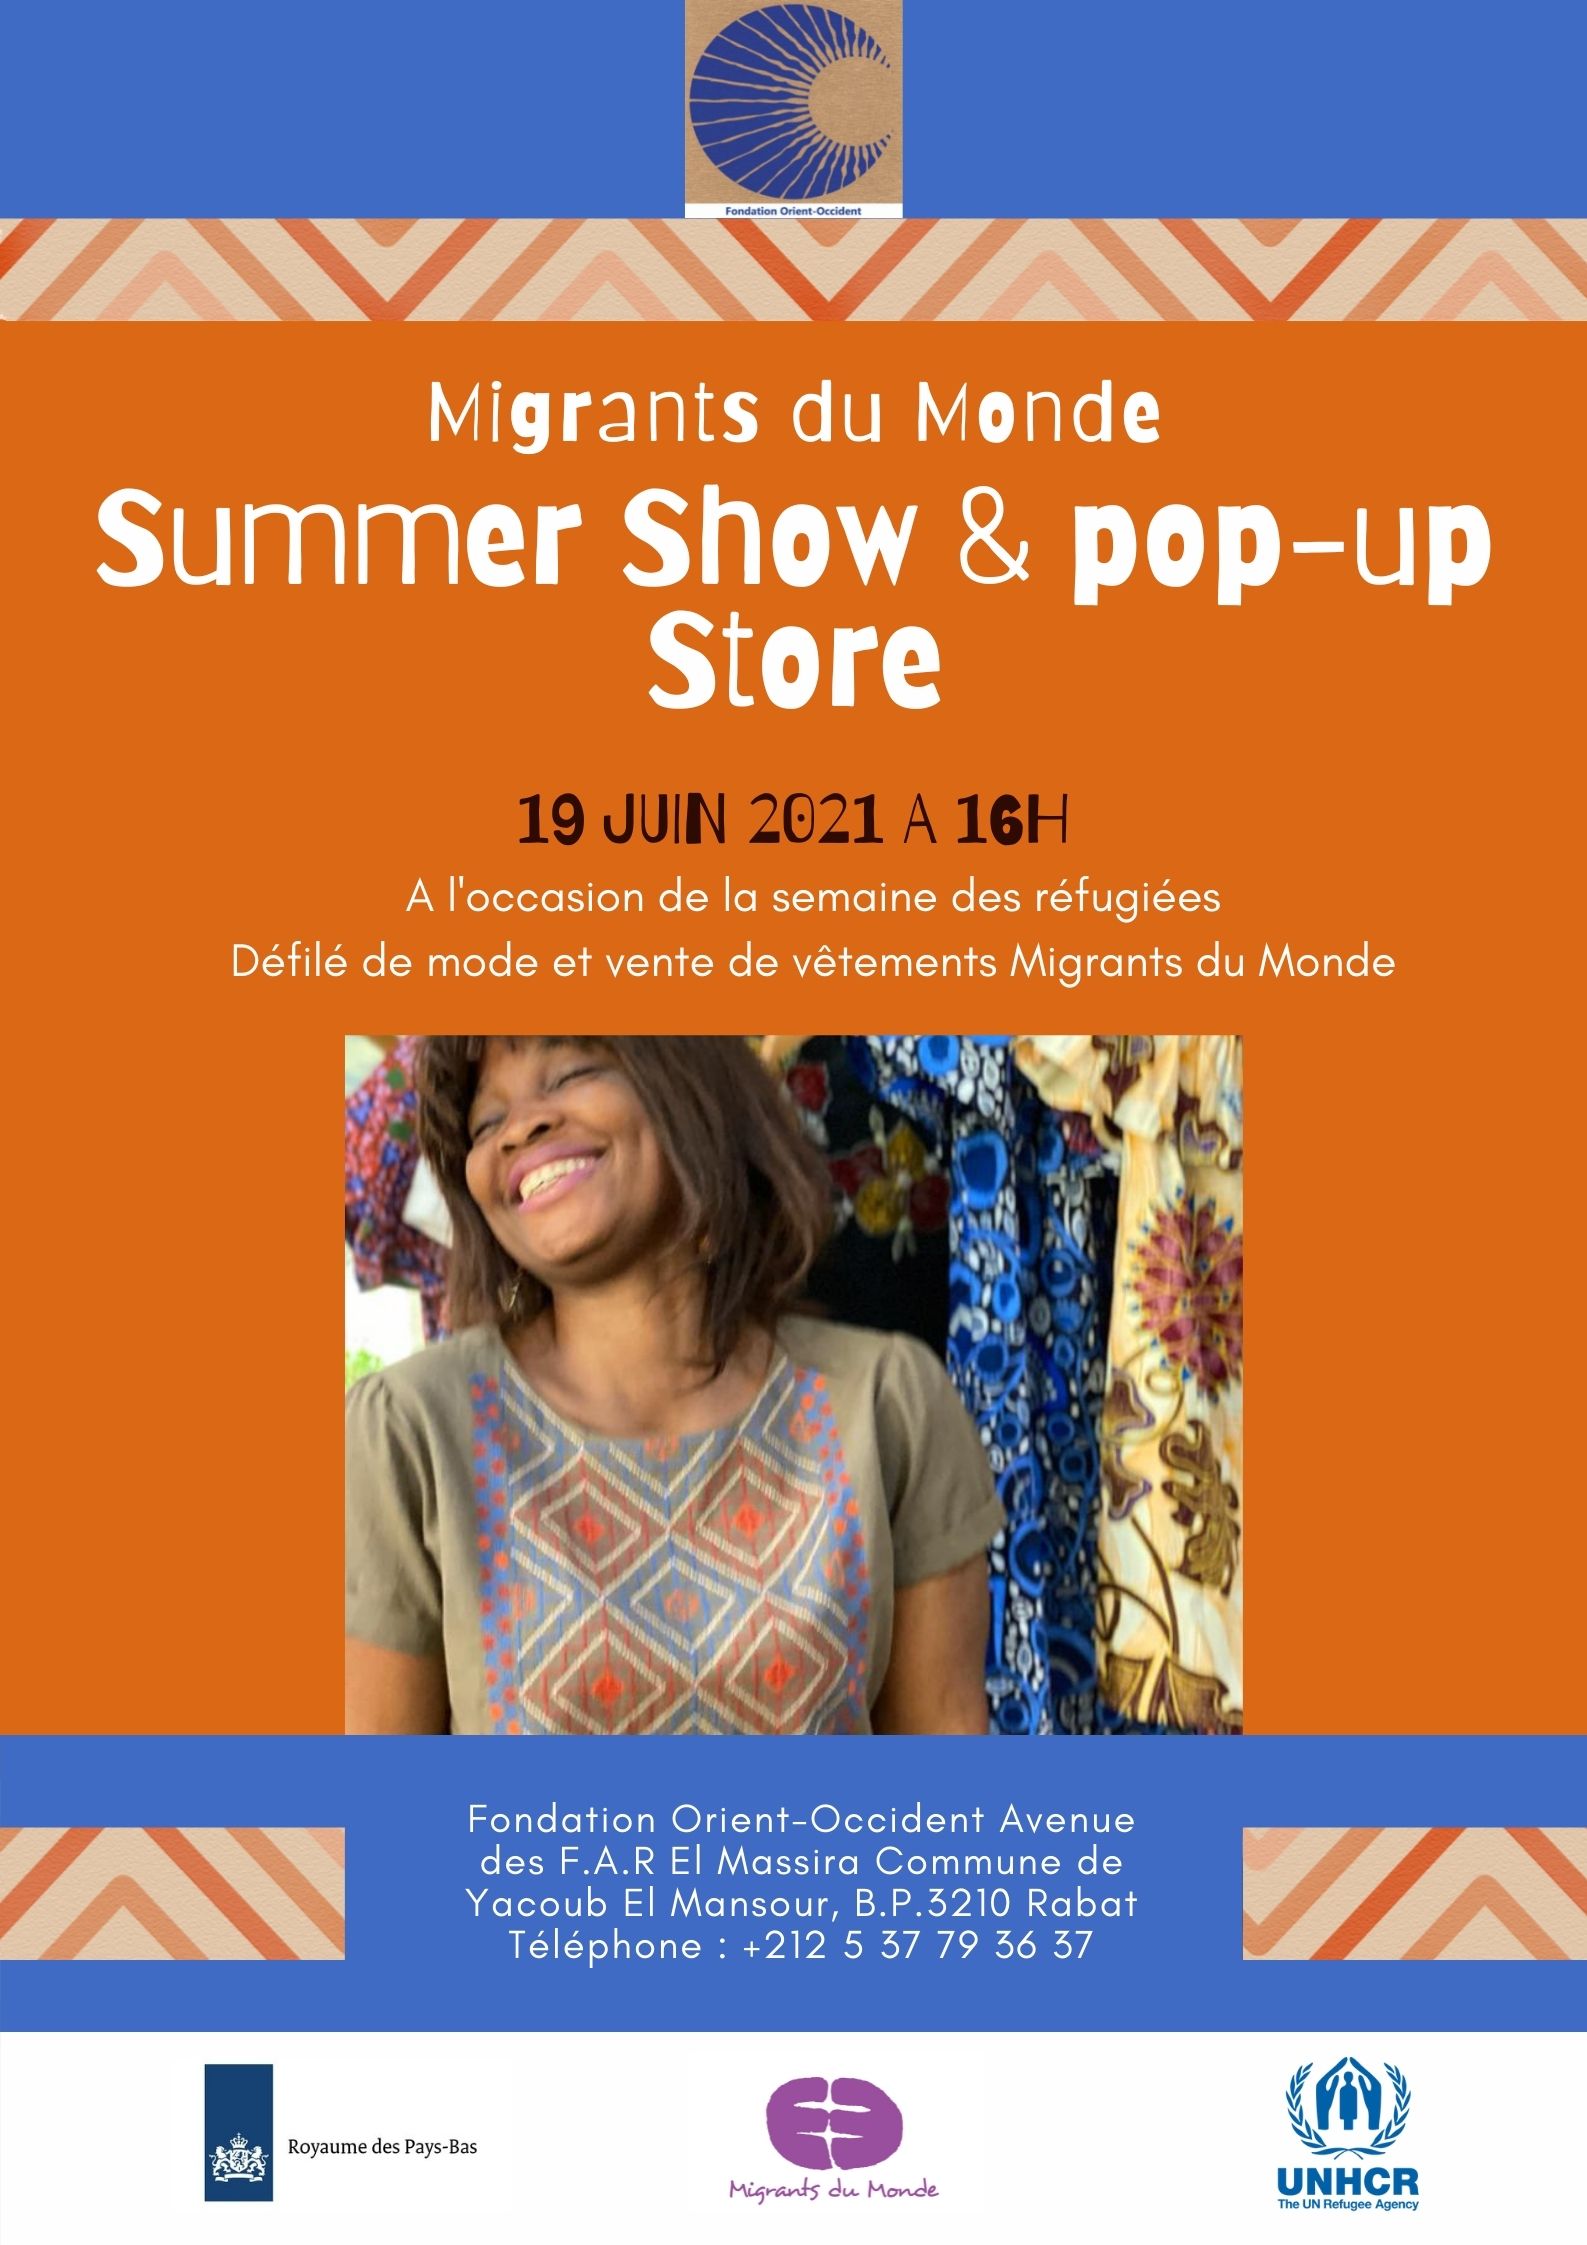 Summer Show & Pop-up store Migrants du Monde